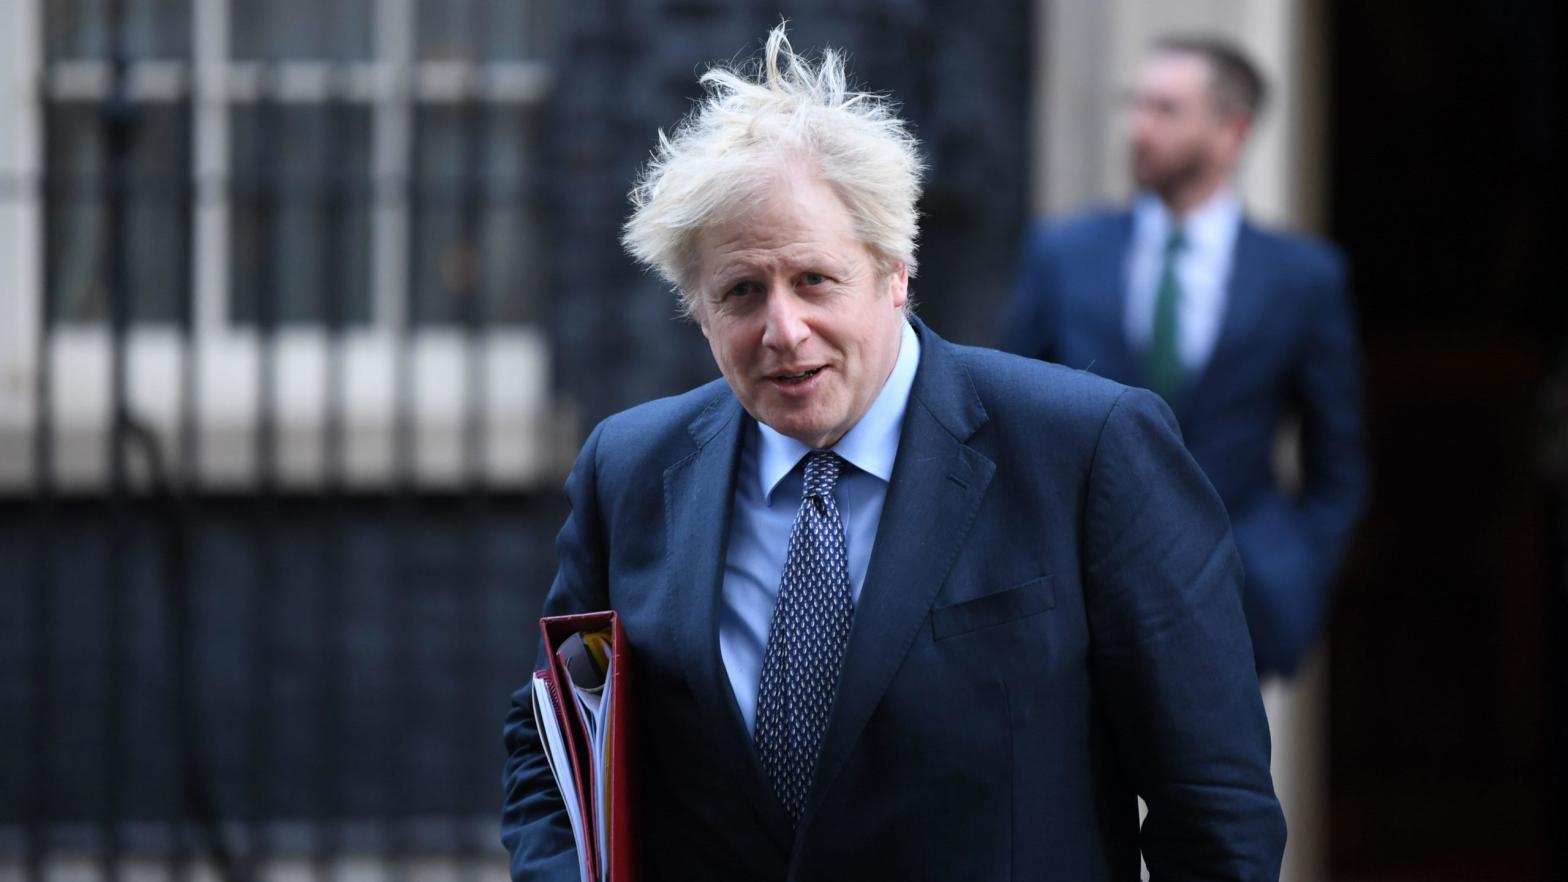 Britain's Prime Minister Boris Johnson leaves 10 Downing Street in London on December 1, 2020 (Photo: Daniel Leal-Olivas, Getty Images)